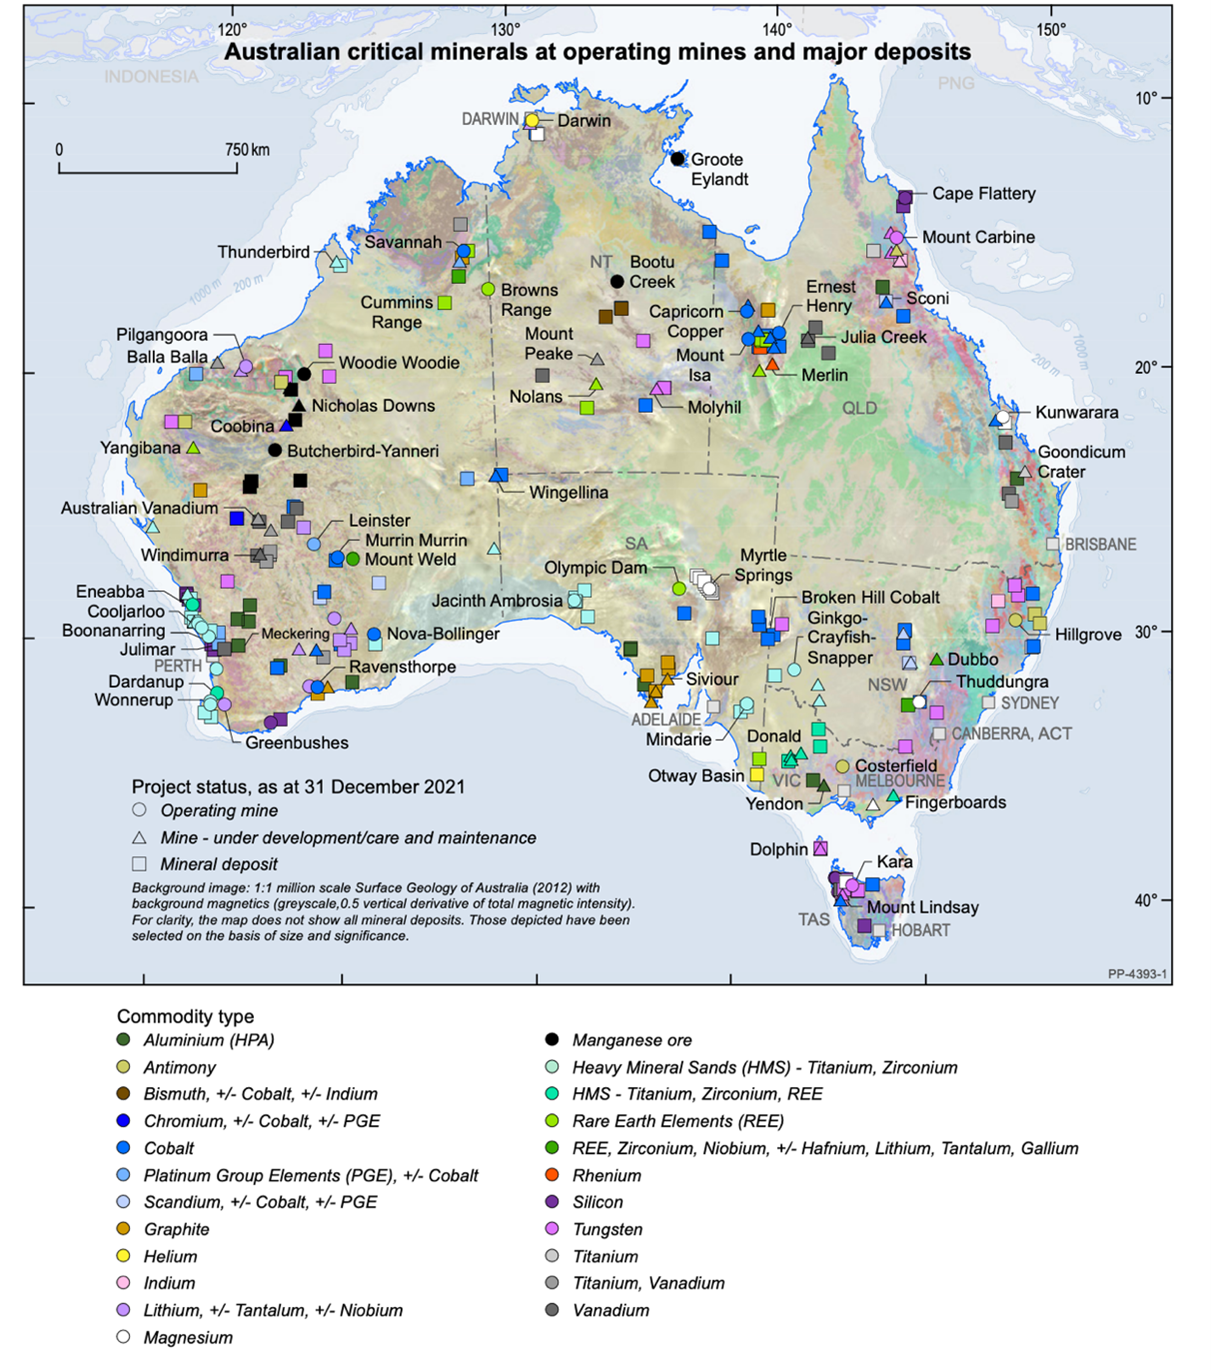 Australian critical minerals production sites map